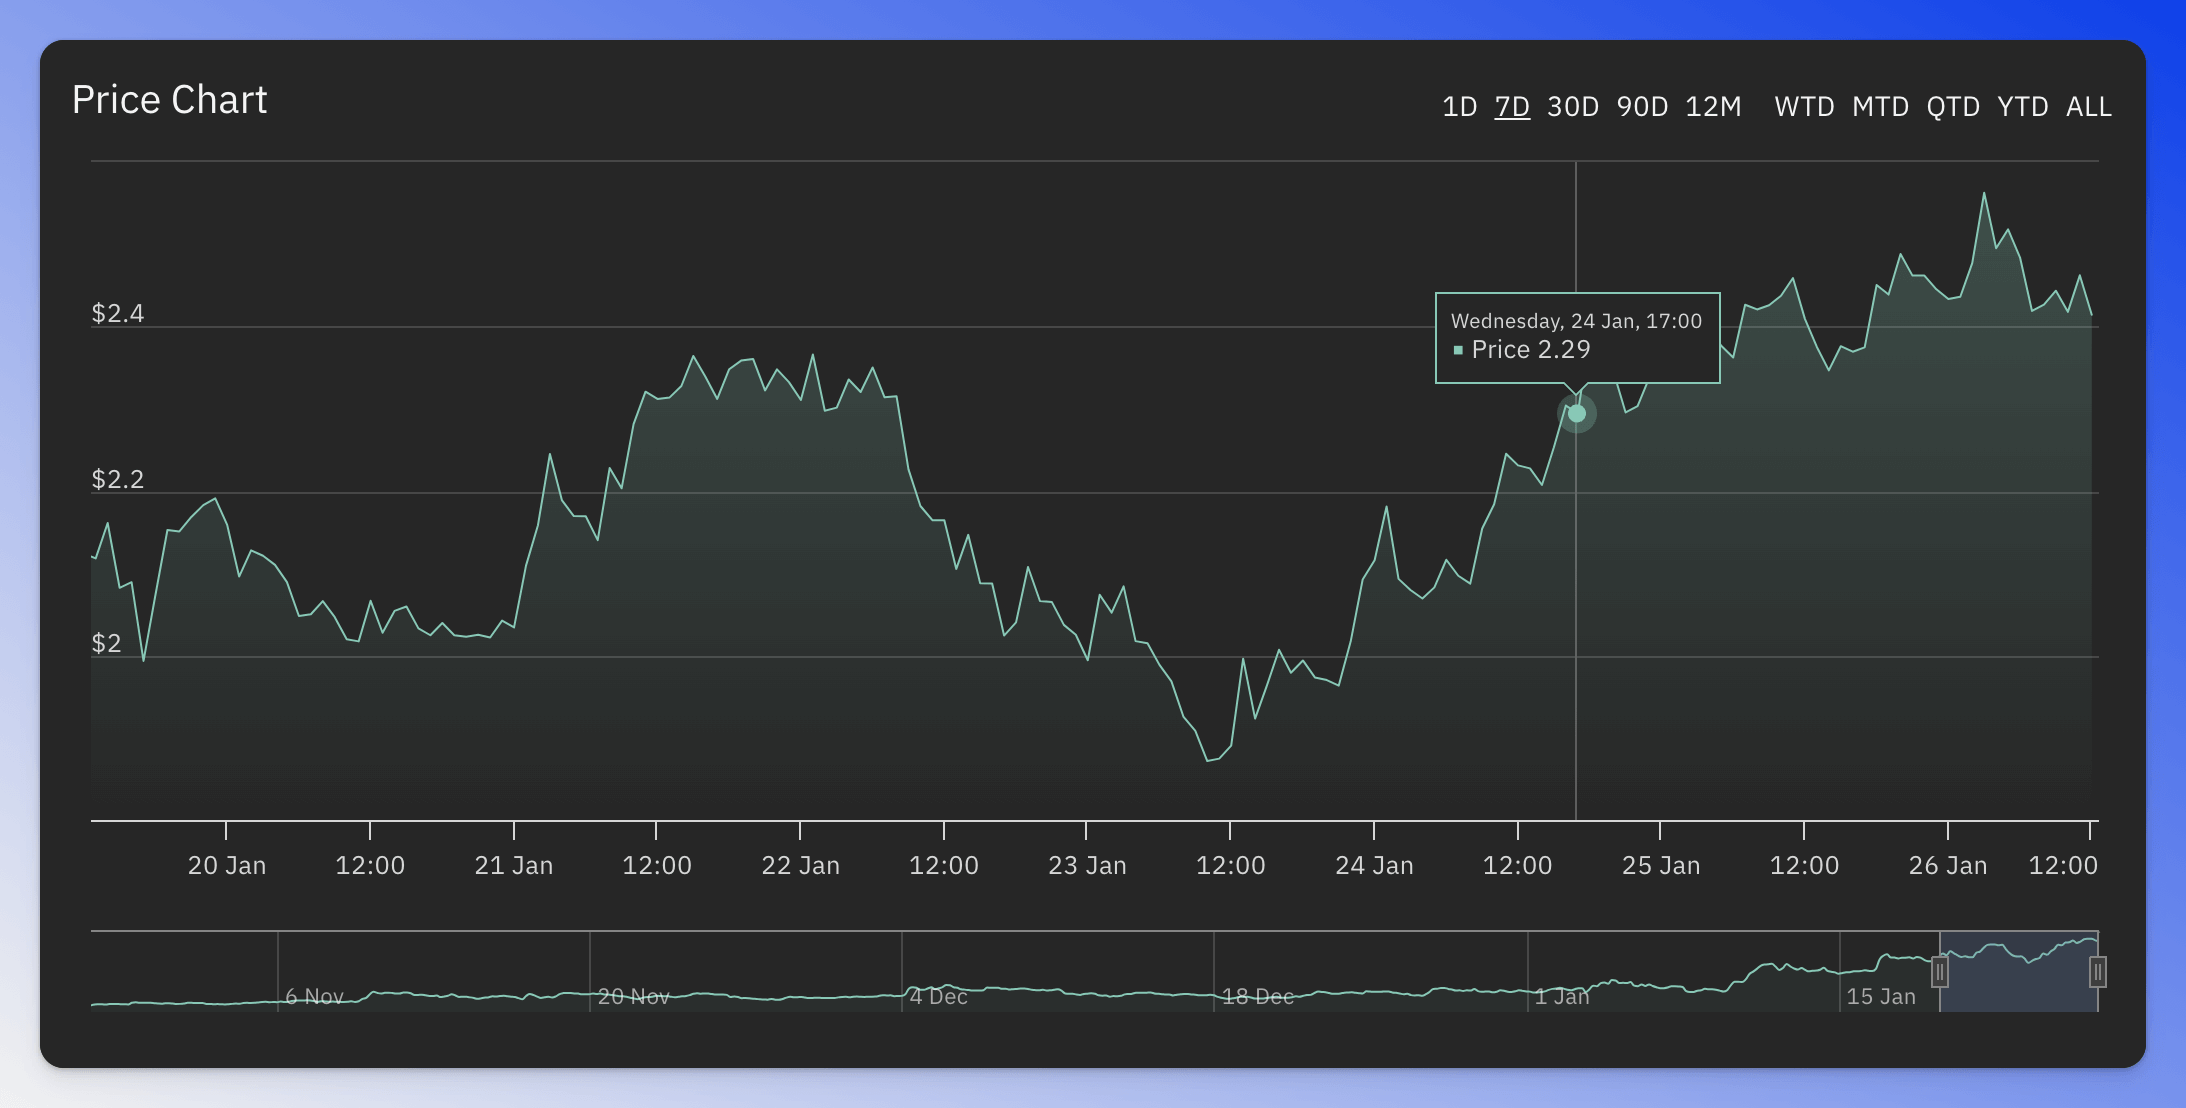 Green price chart, indicating a bullish trend. 